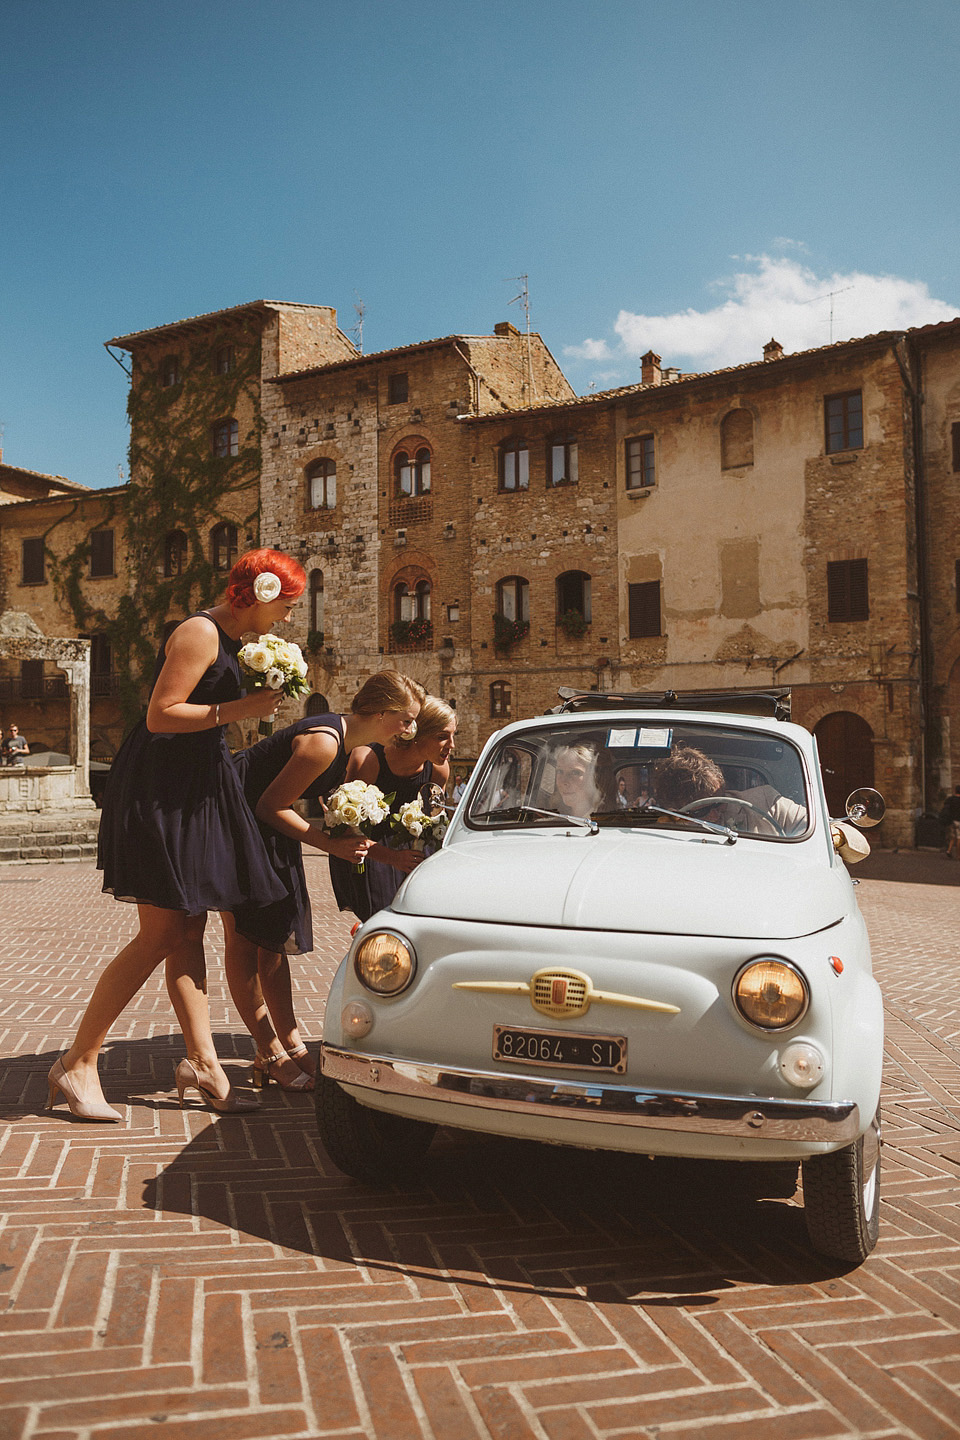 ed peers photography, eliza jane howell wedding dress, destination wedding, tuscany wedding, weddings in italy